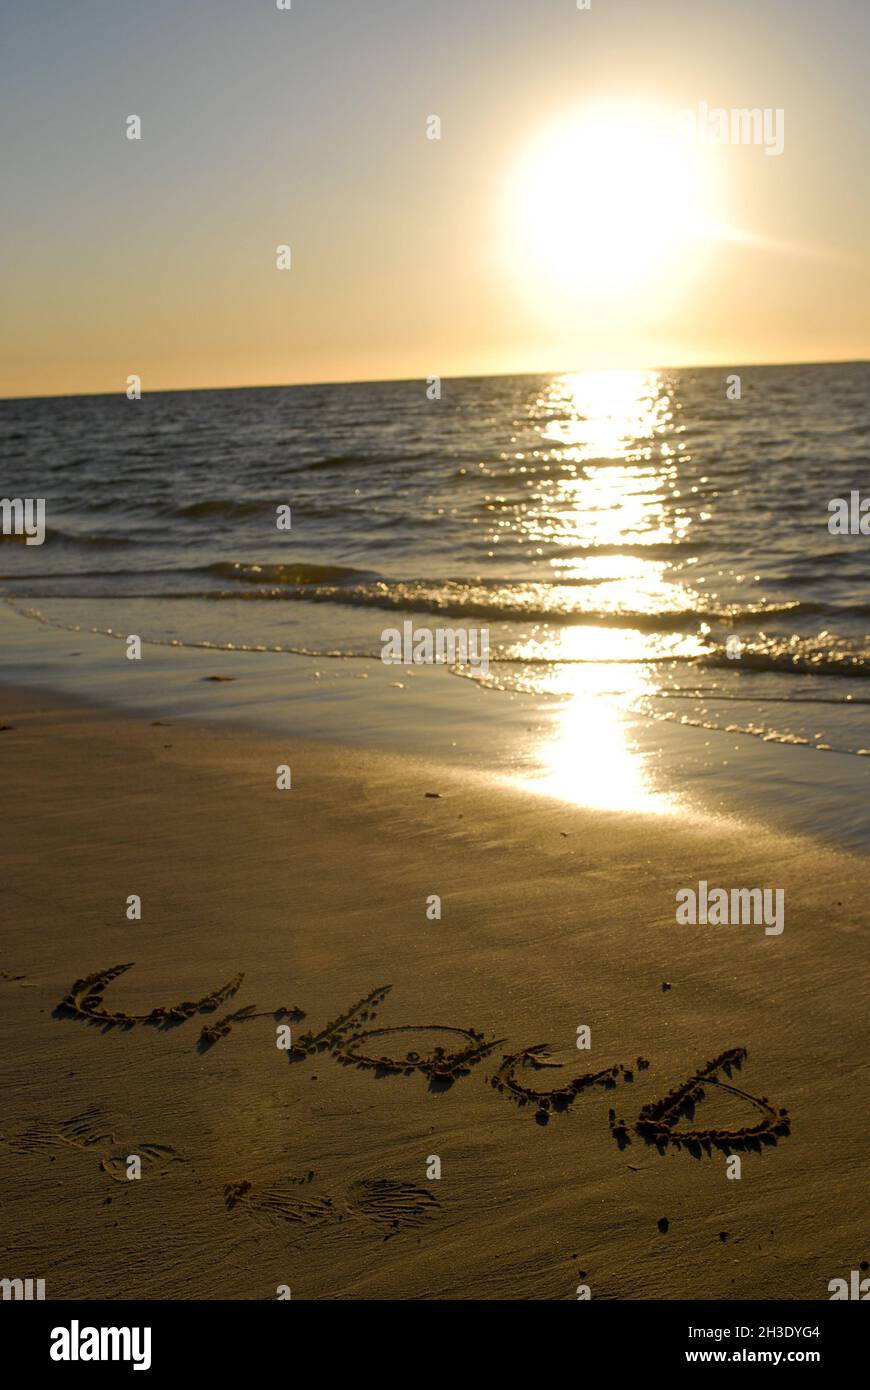 writing 'Urlaub' (holiday) on the beach, Australia Stock Photo